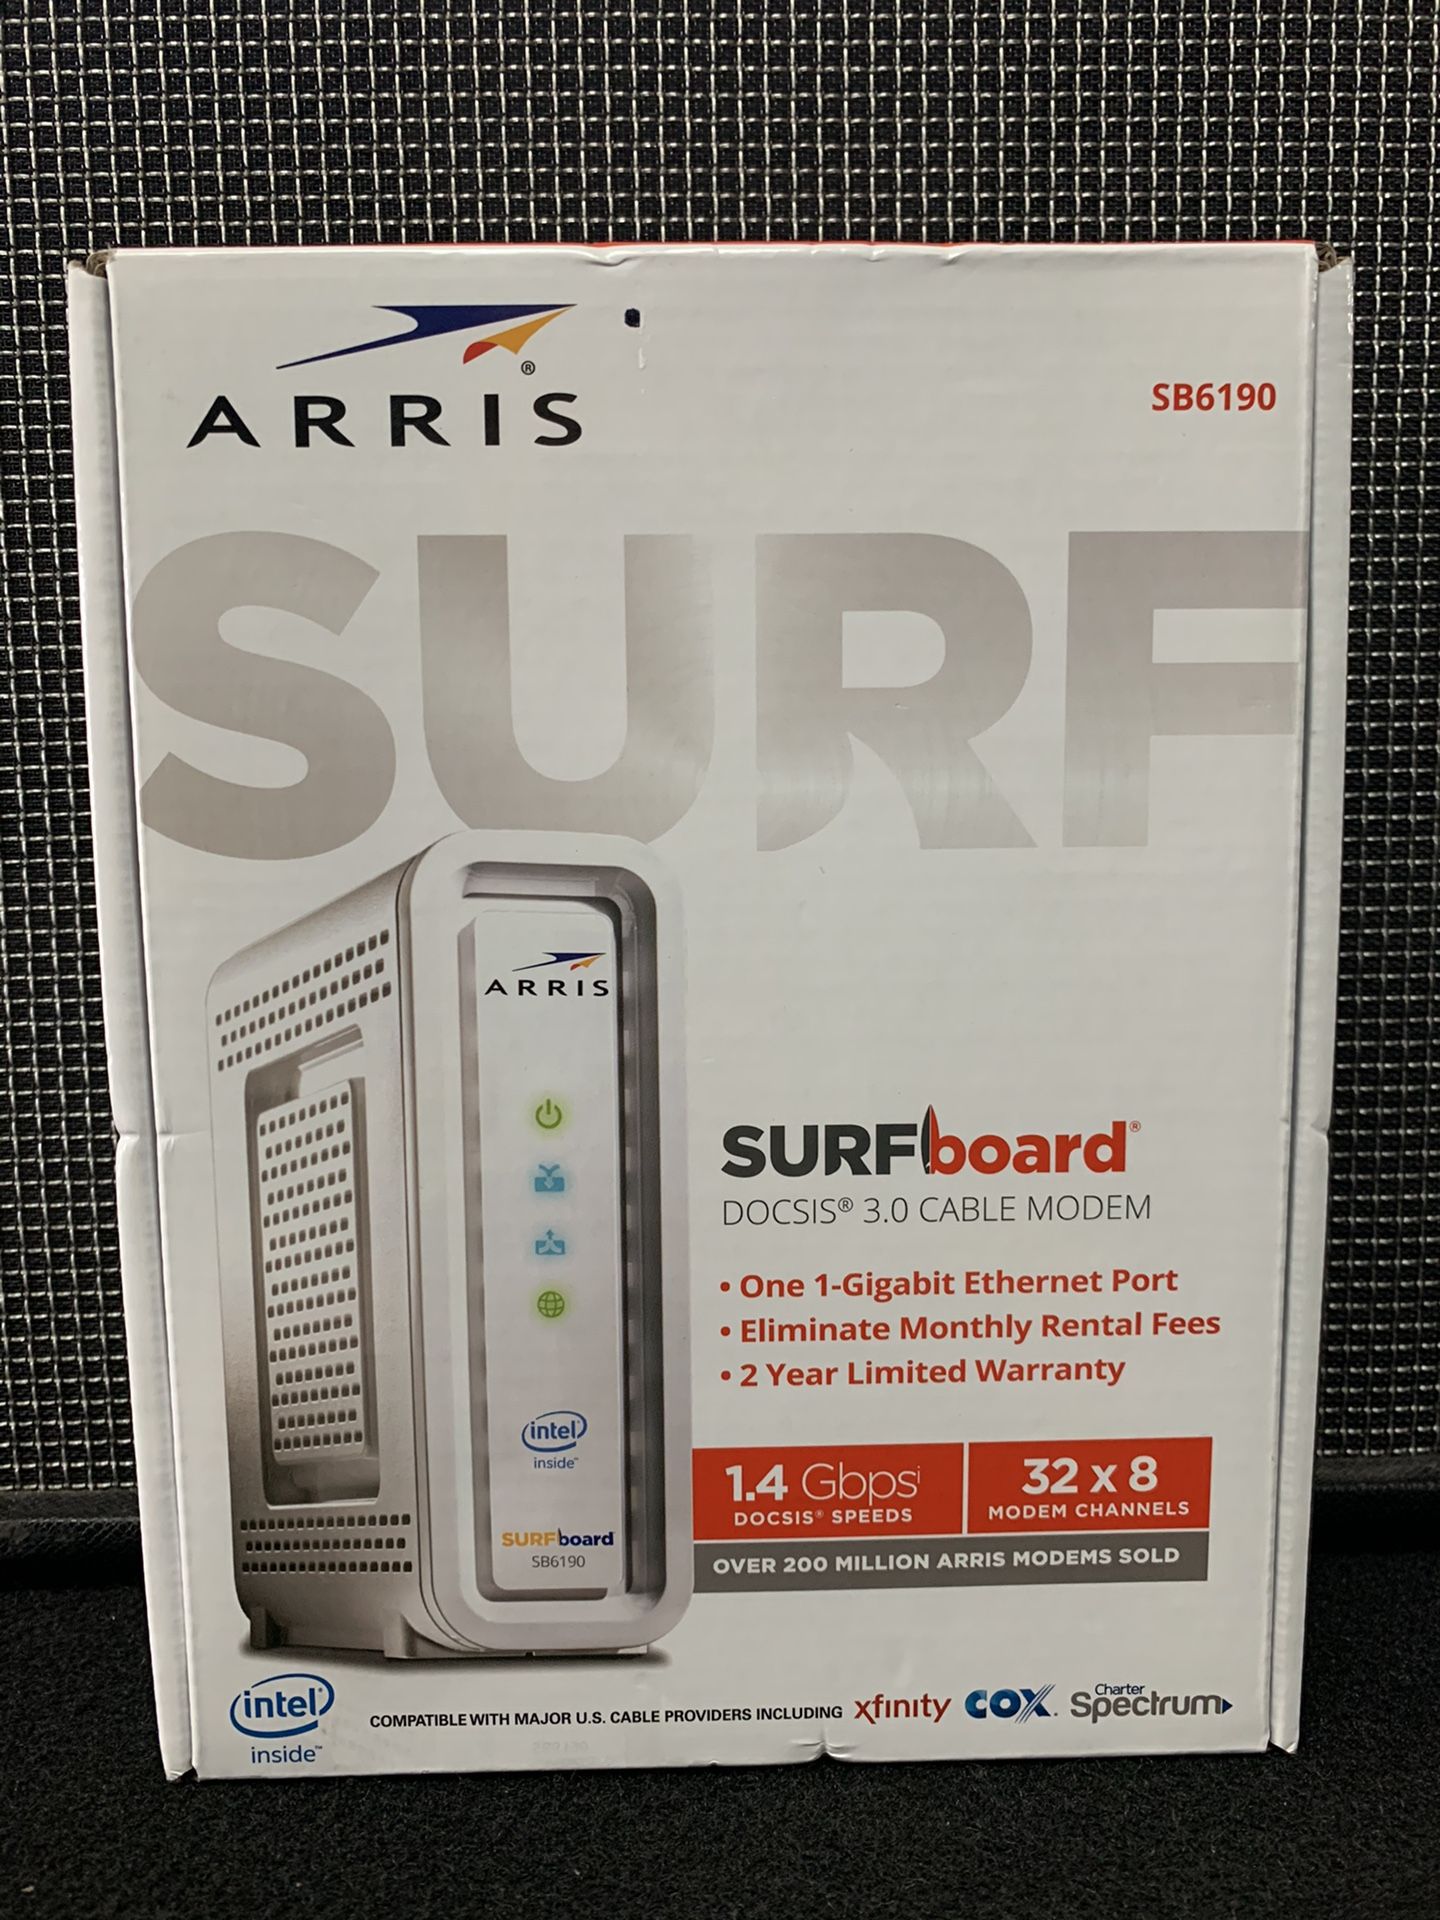 ARRIS Surfboard SB6190 Gigabit Cable Modem